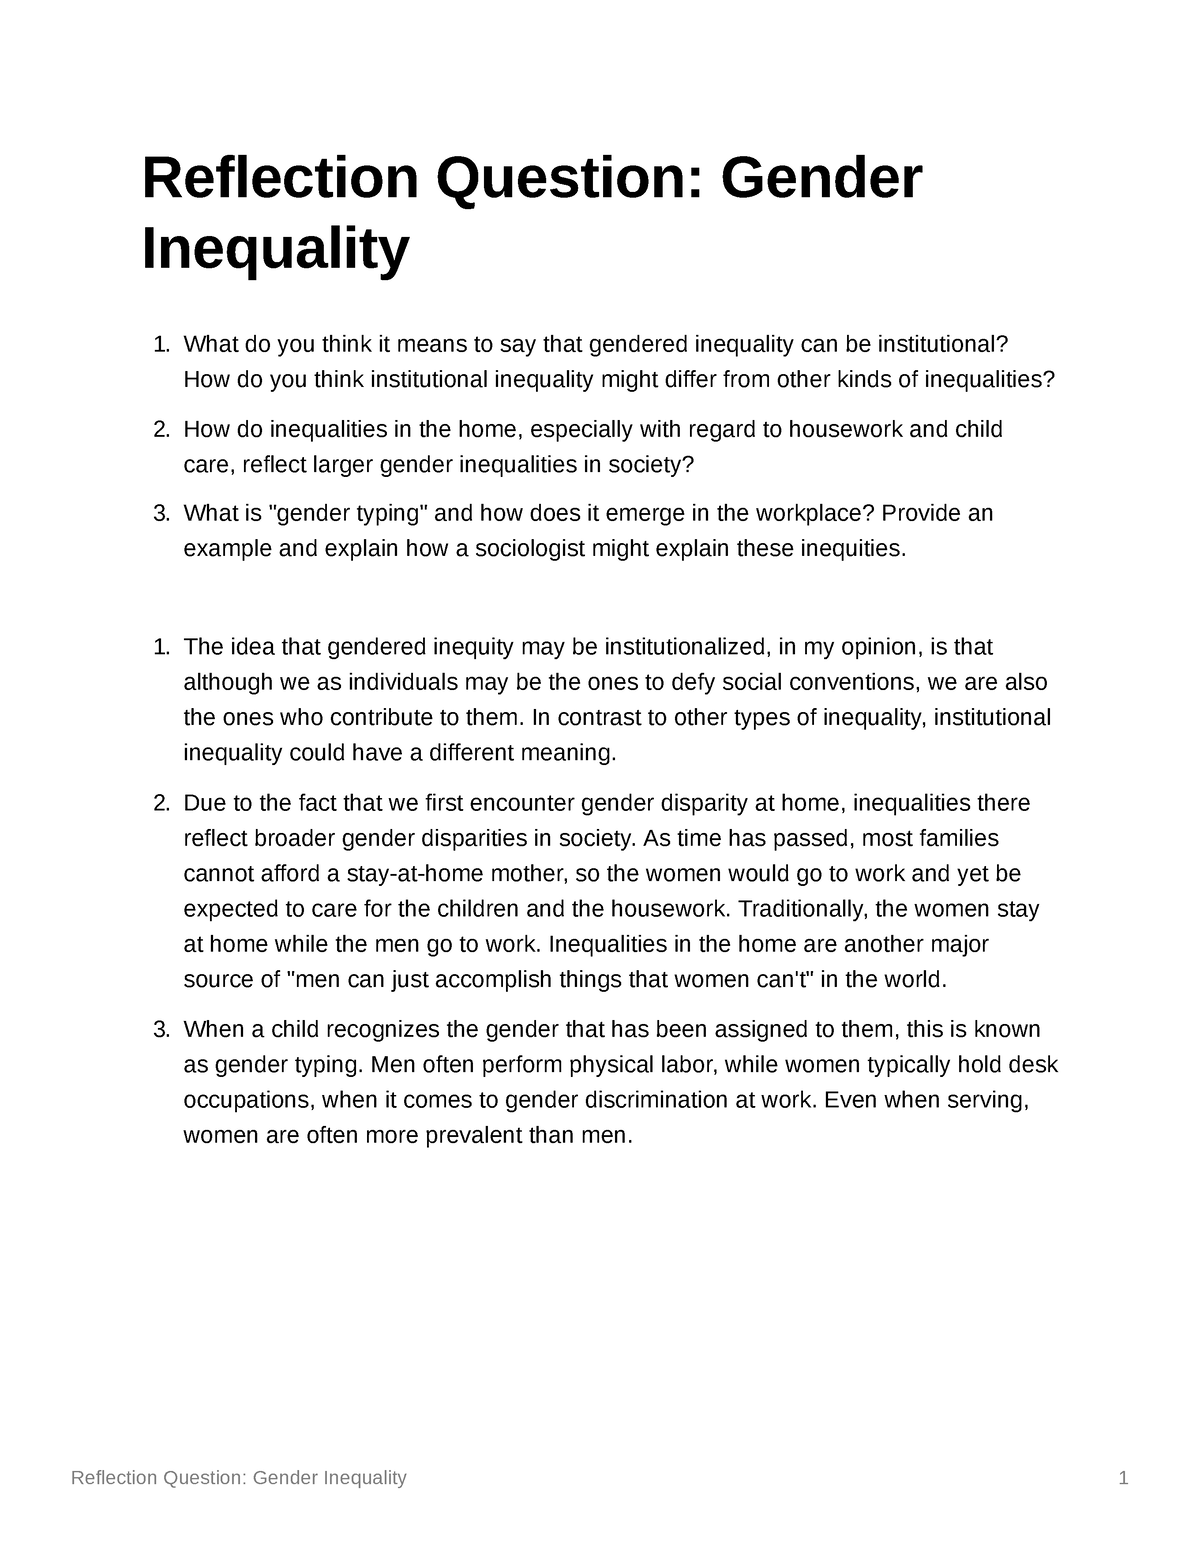 inequality reflection essay